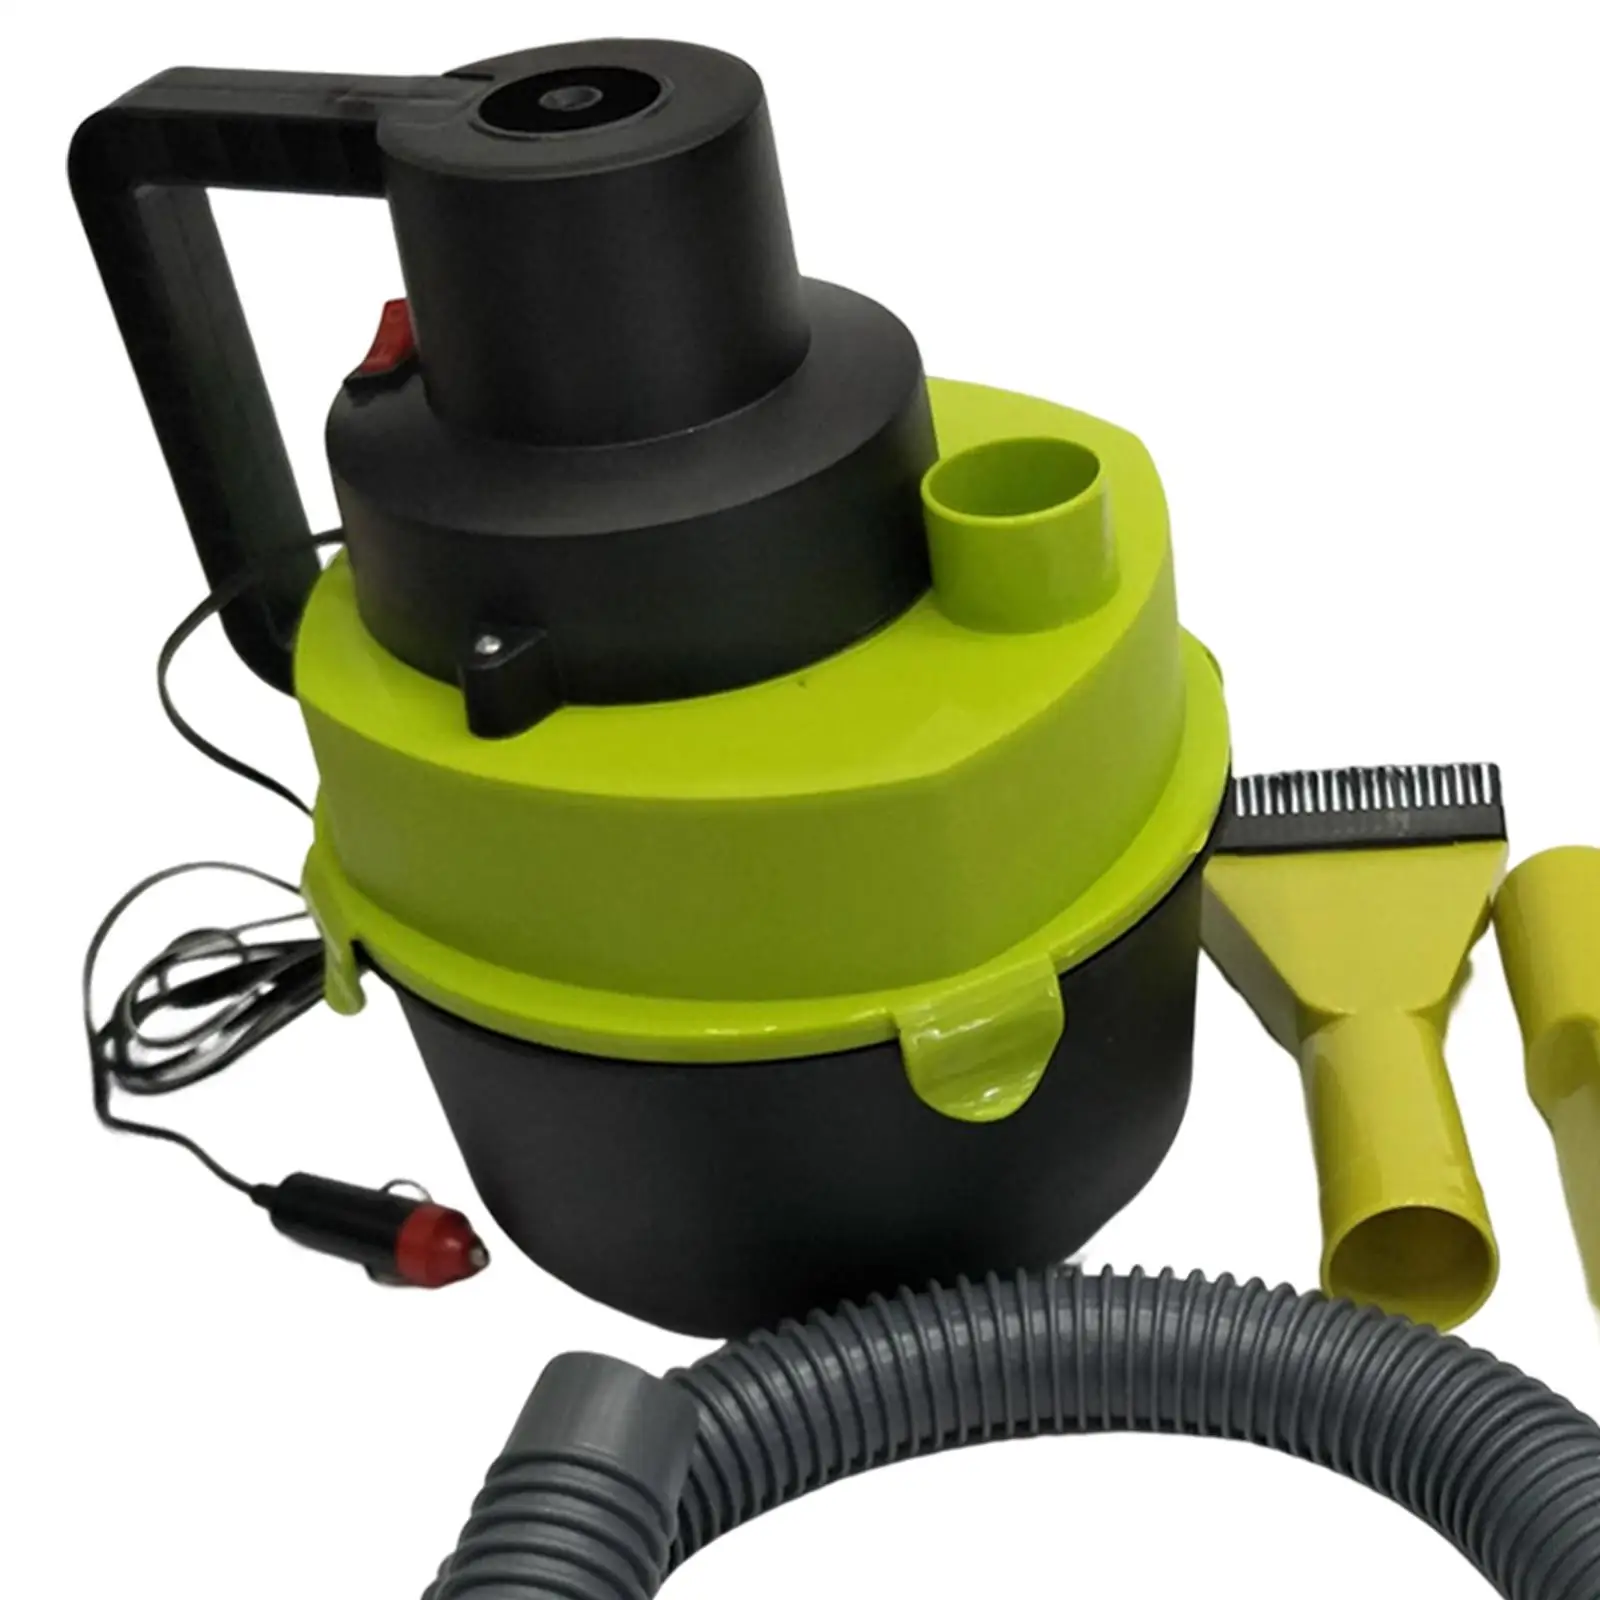 Shop Vacuum Cleaner Multifunctional Dual Use Handheld Debris Liquid Car Vacuum for Basement Cars Corners Workshop Window Seams